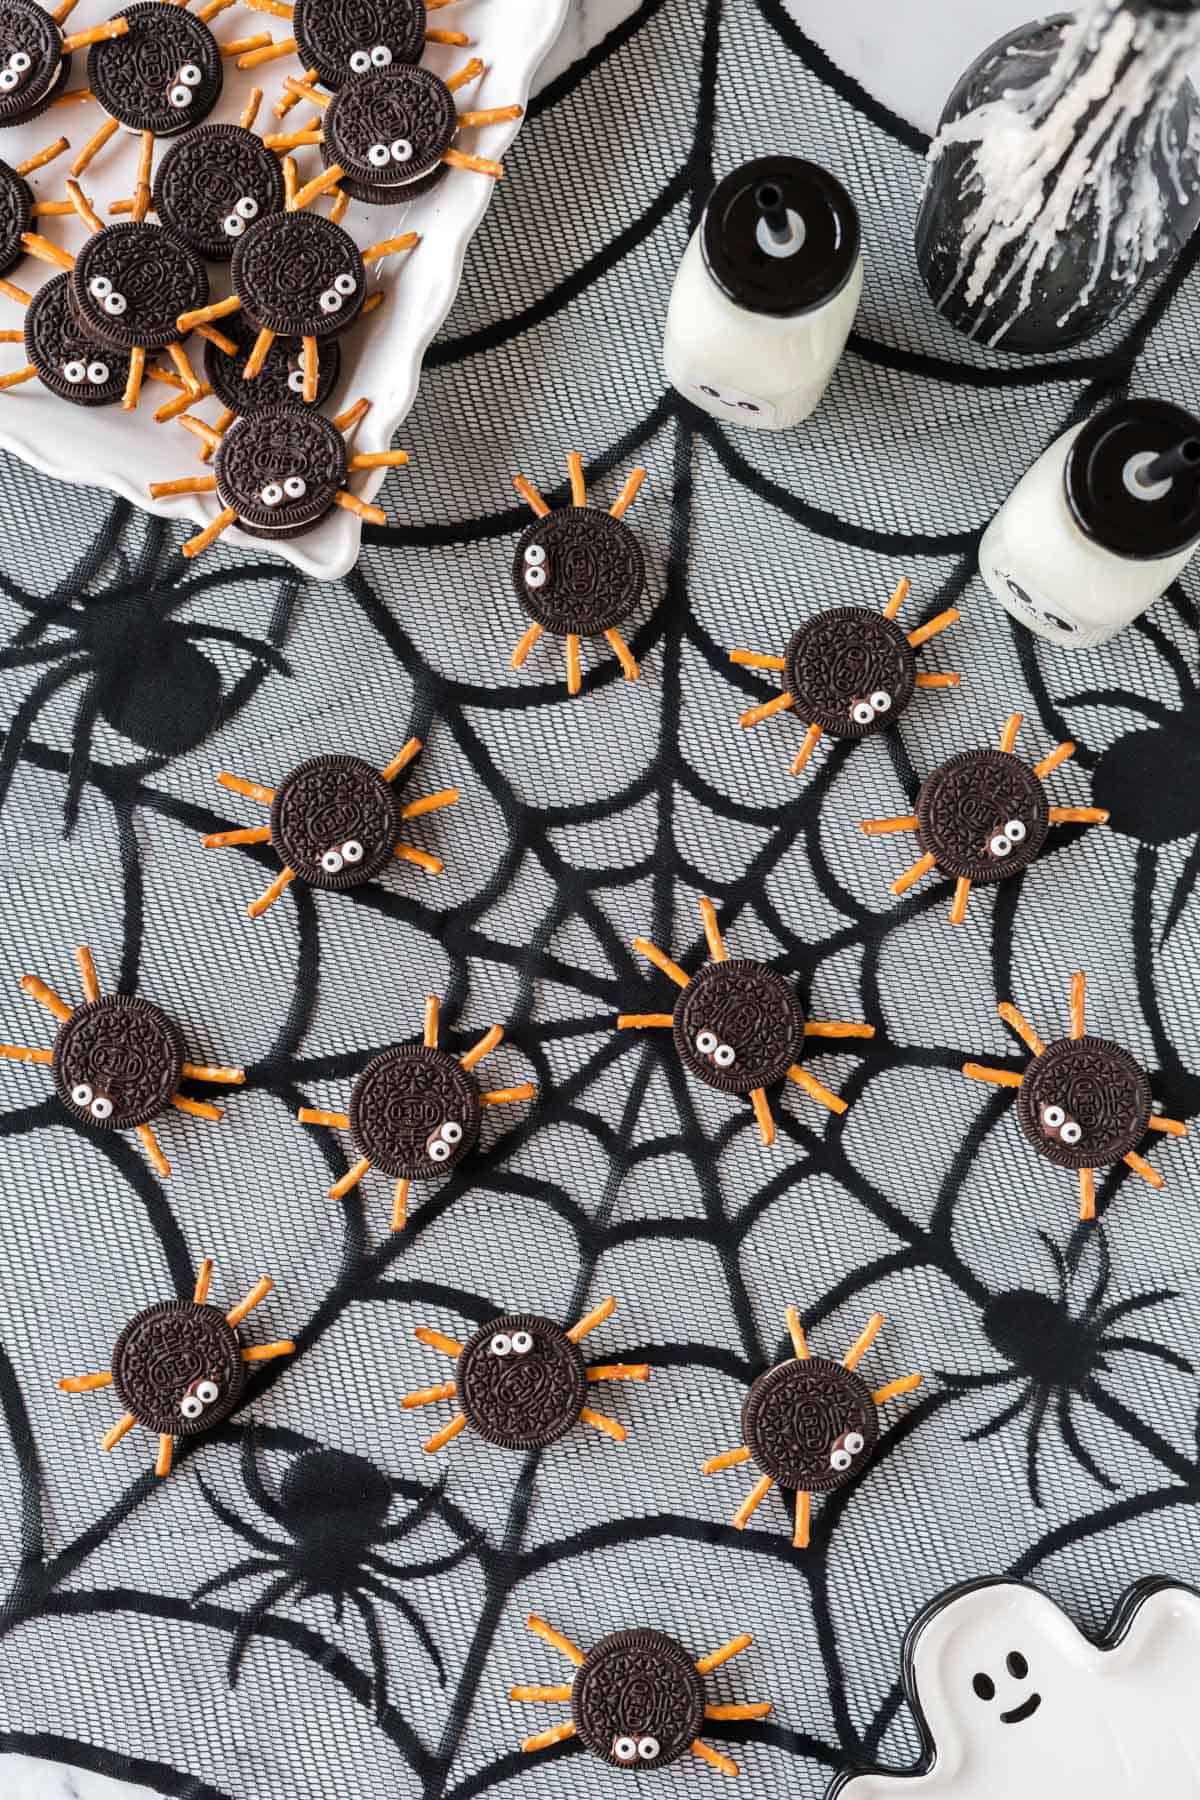 oreos spiders on a cobweb background